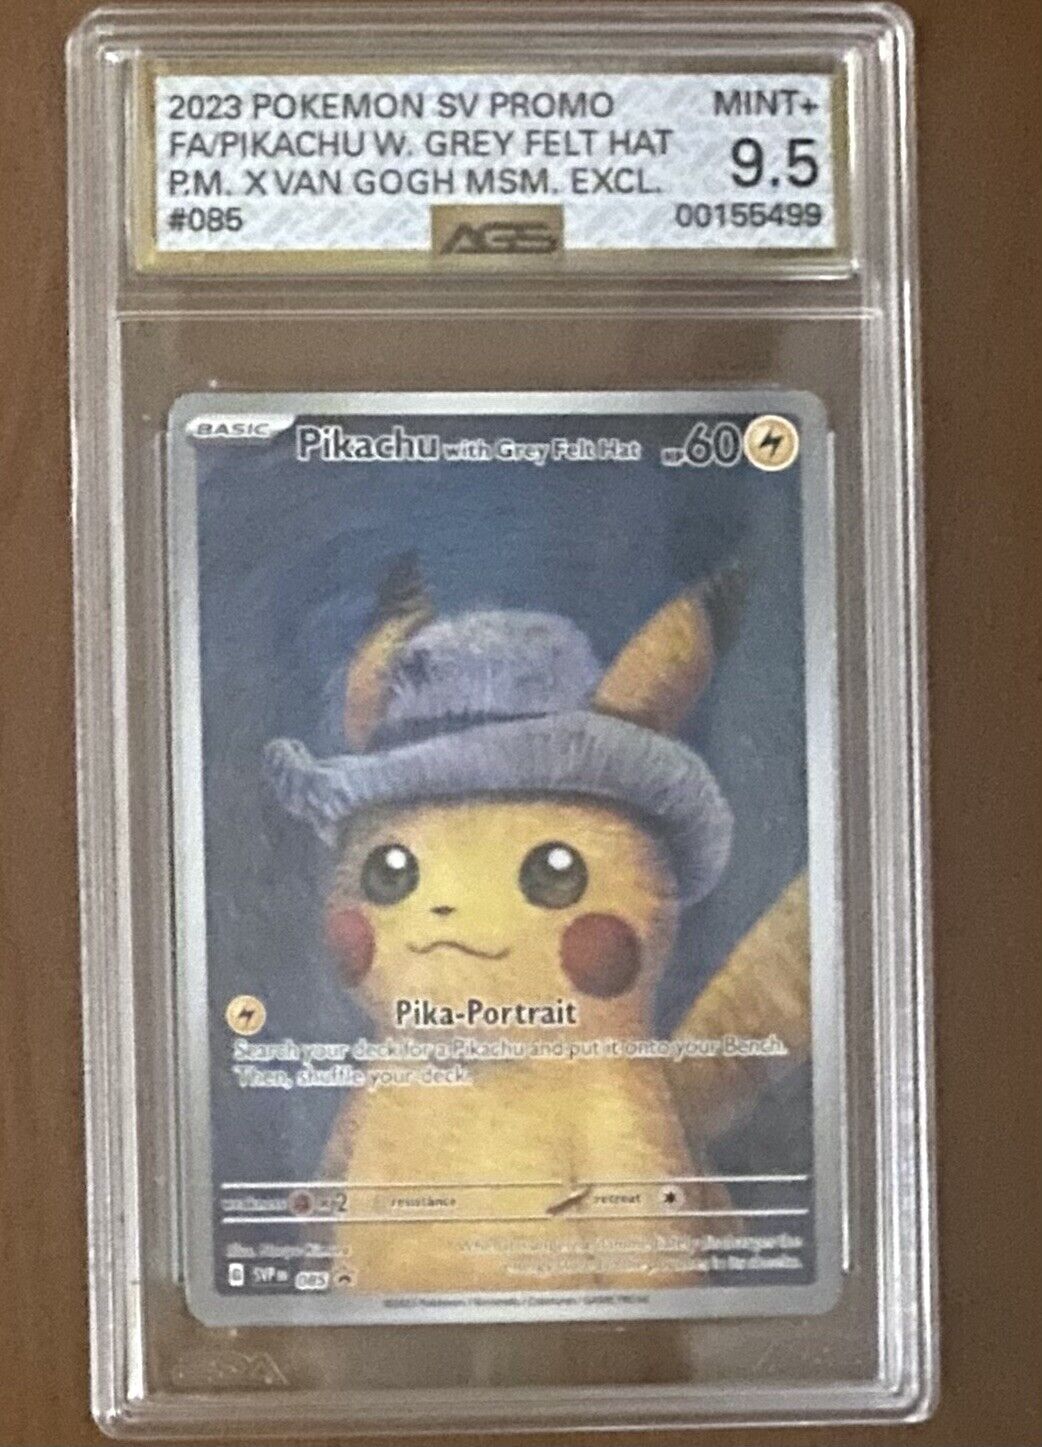 2023 Pokemon x Van Gogh Promo #085 Pikachu With Grey Felt Hat AGS 9.5 Mint+